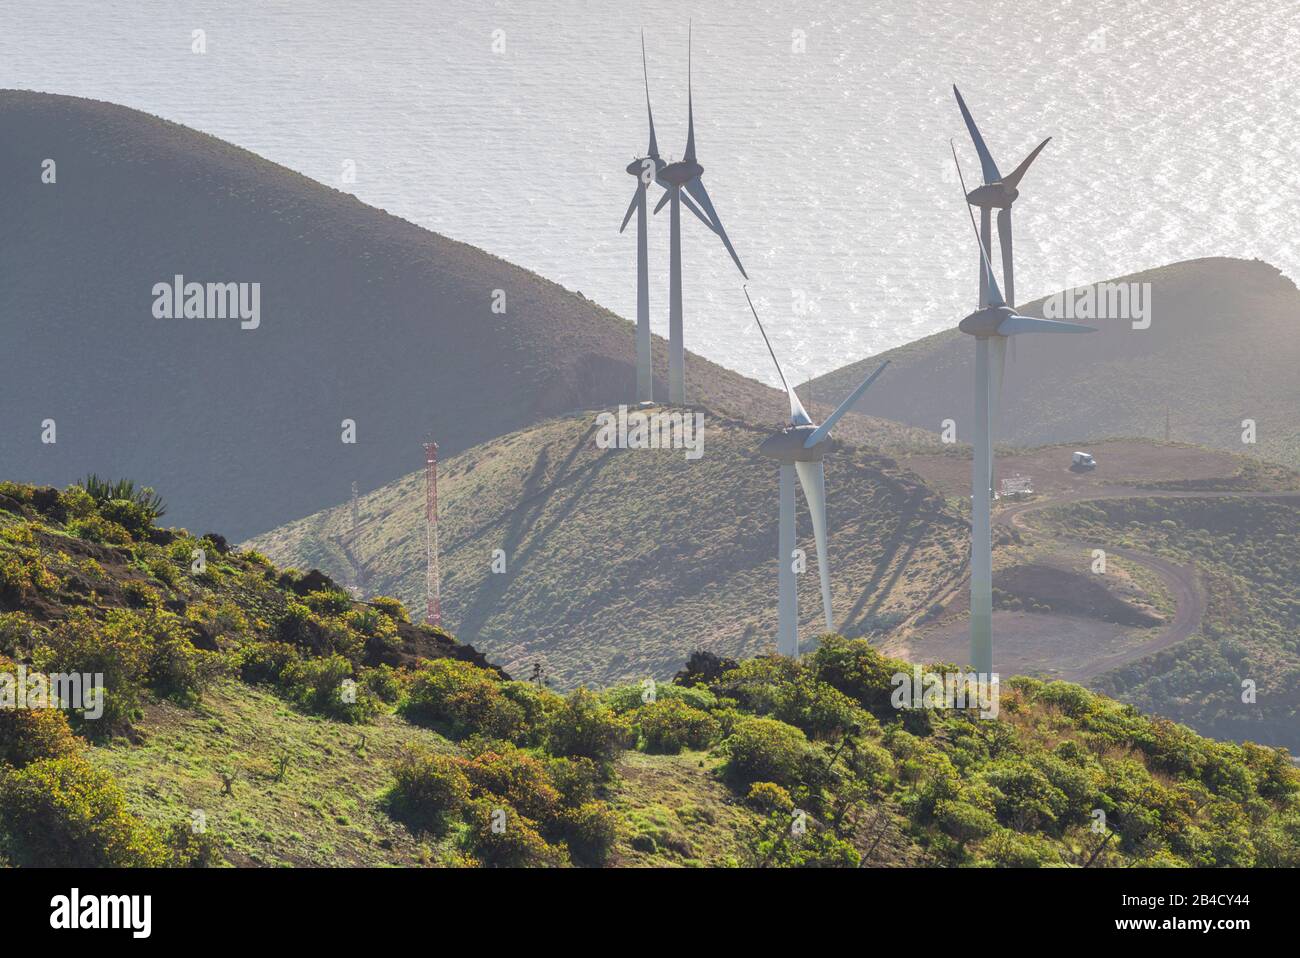 Spain, Canary Islands, El Hierro Island, Valverde, island capital, wind turbines Stock Photo